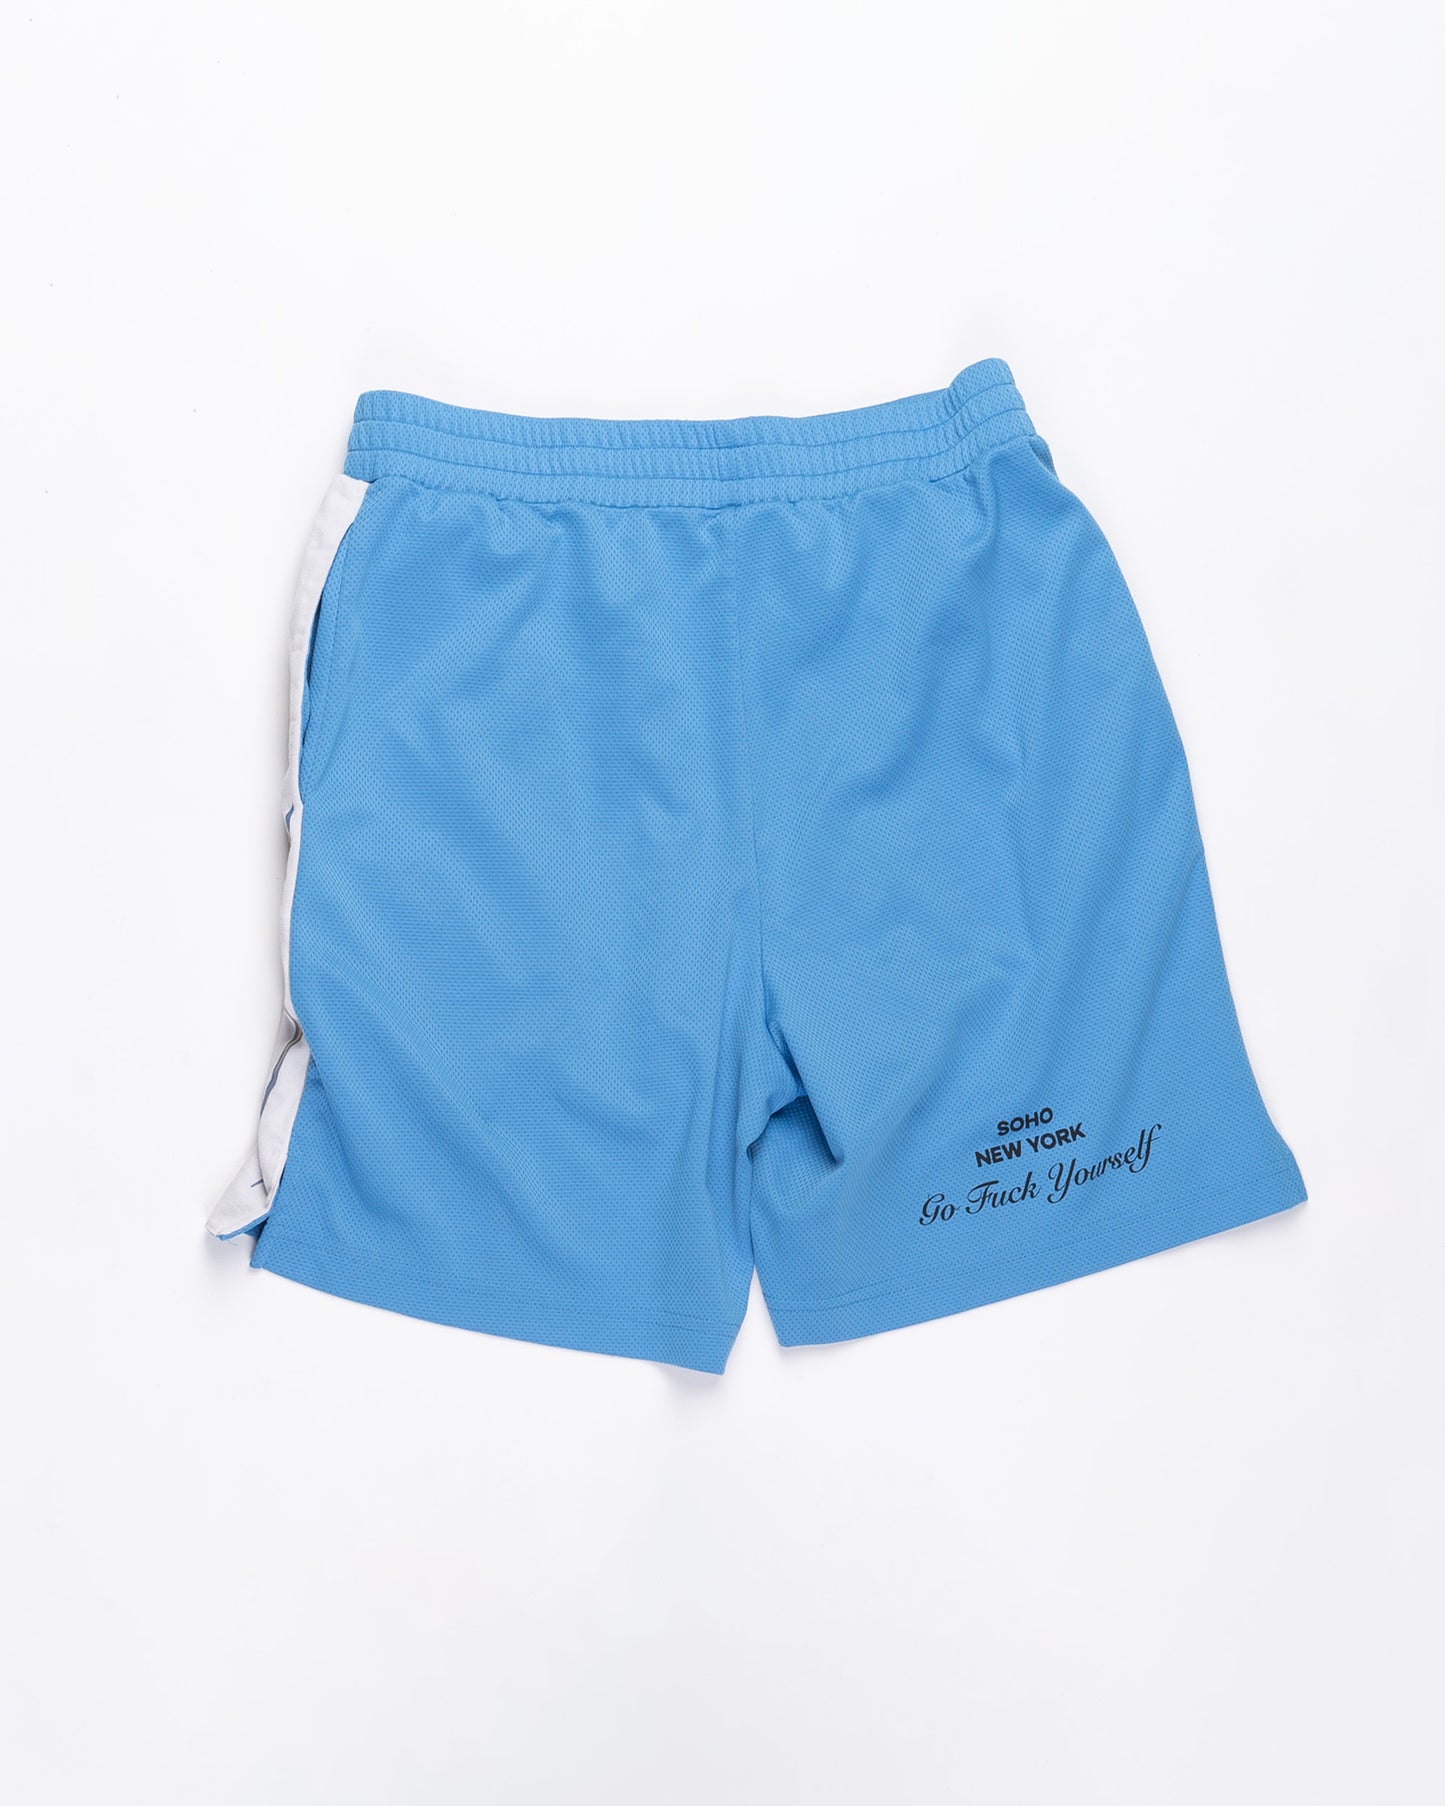 Blue Louis Vuitton Basketball Shorts Size: Large